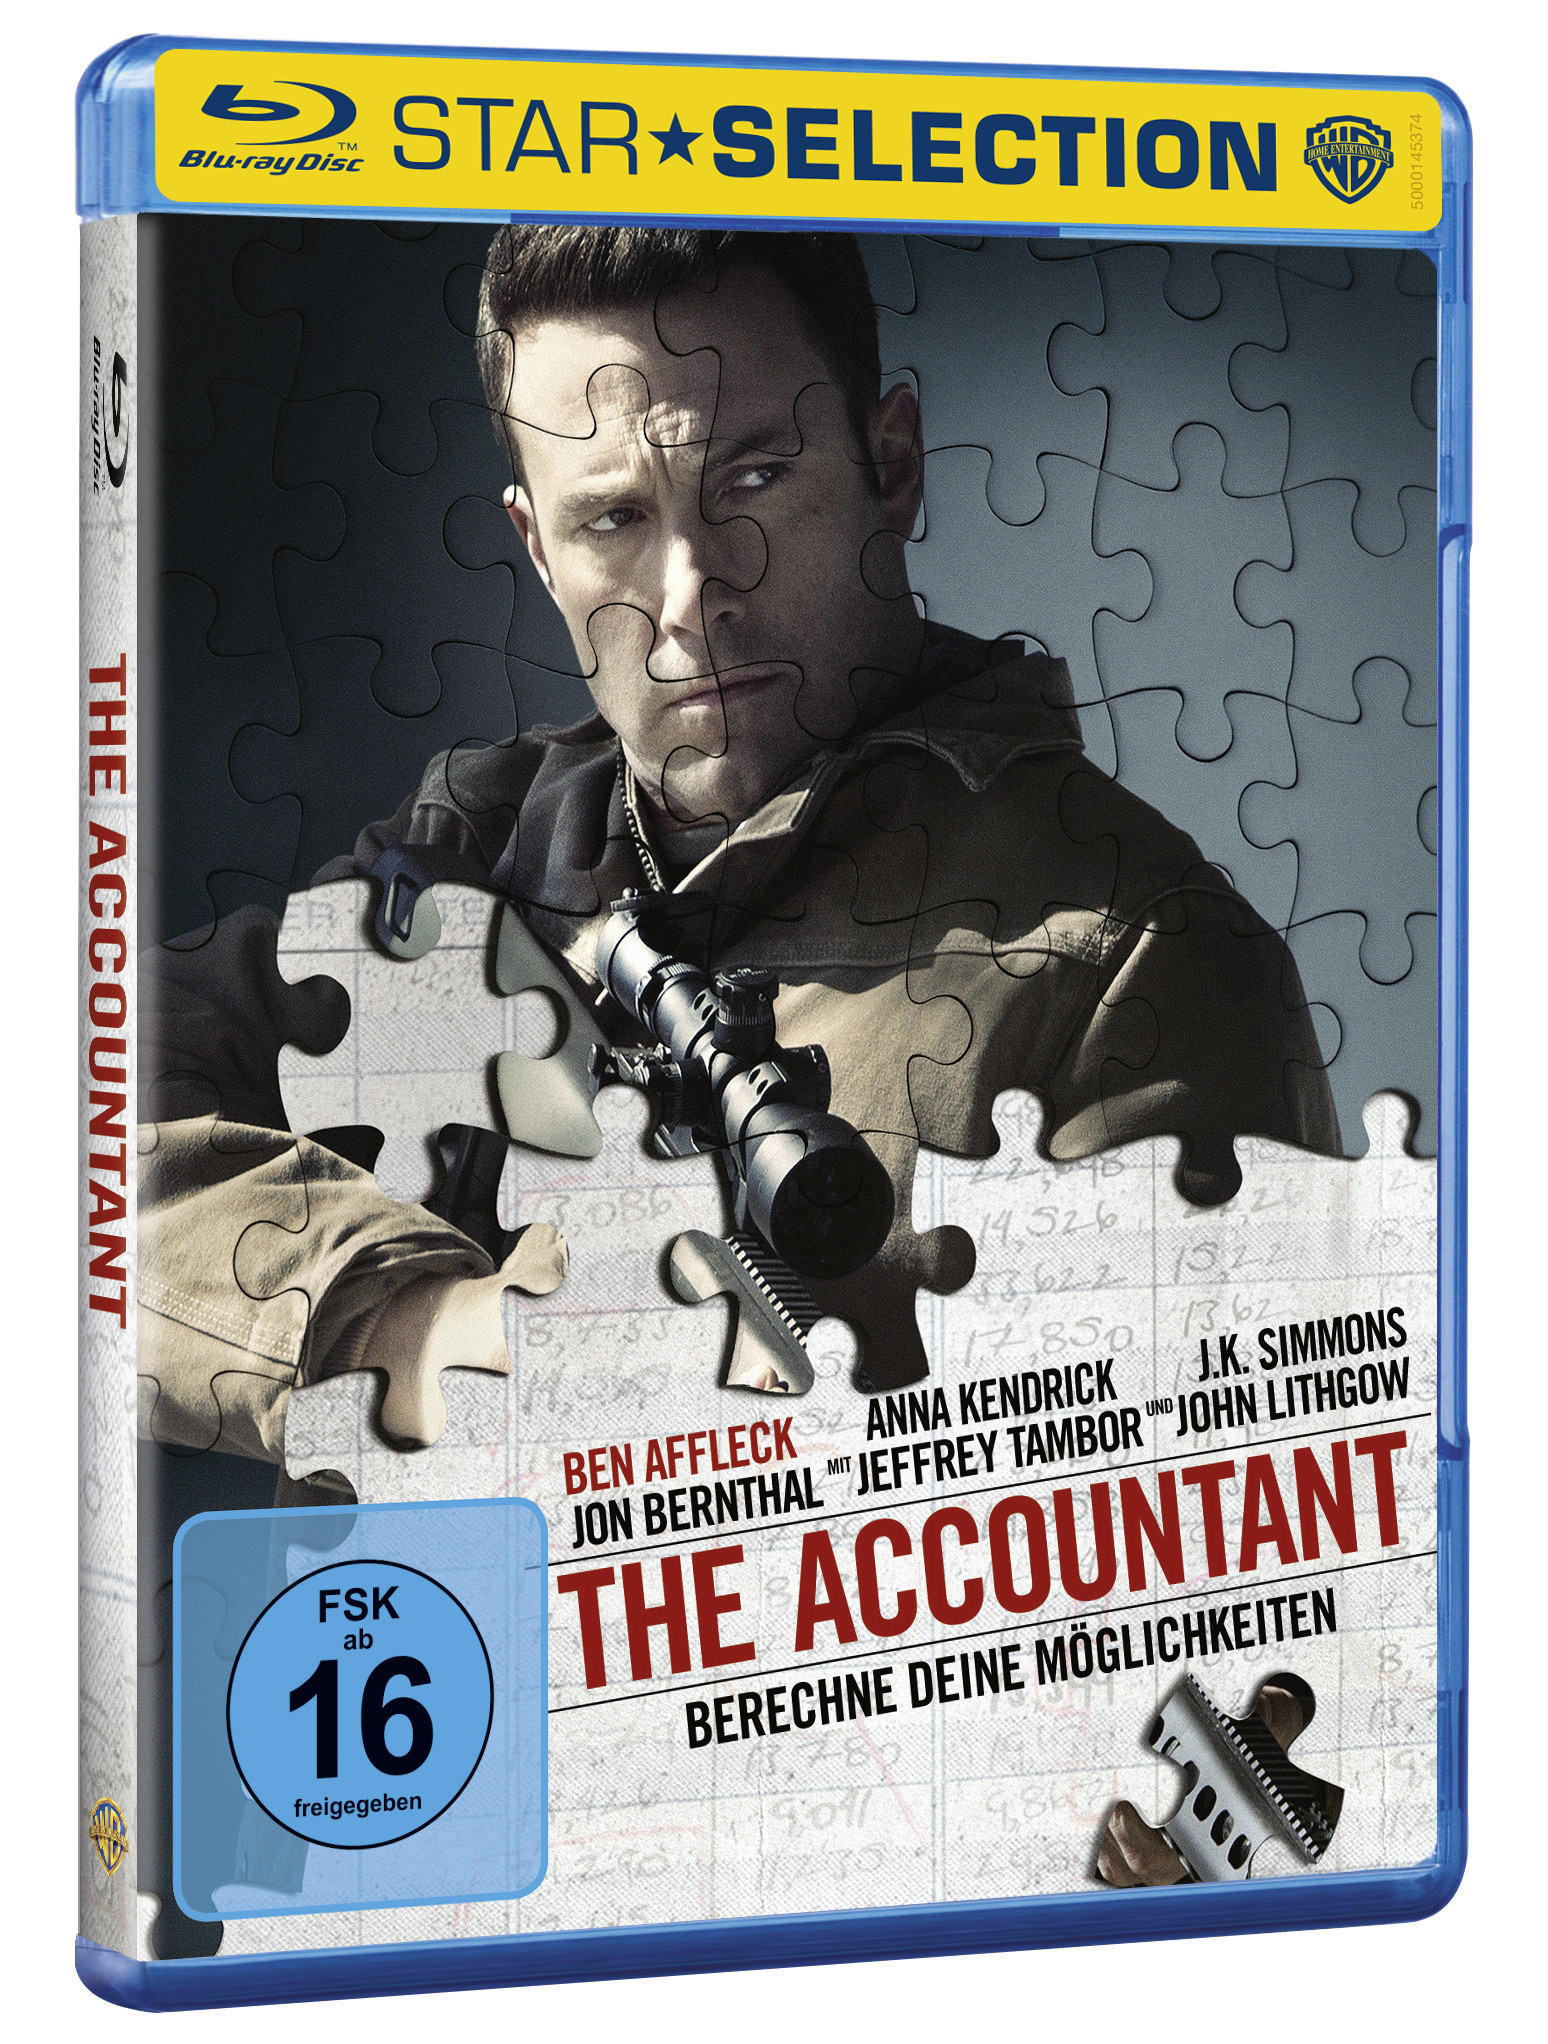 The Blu-ray Accountant